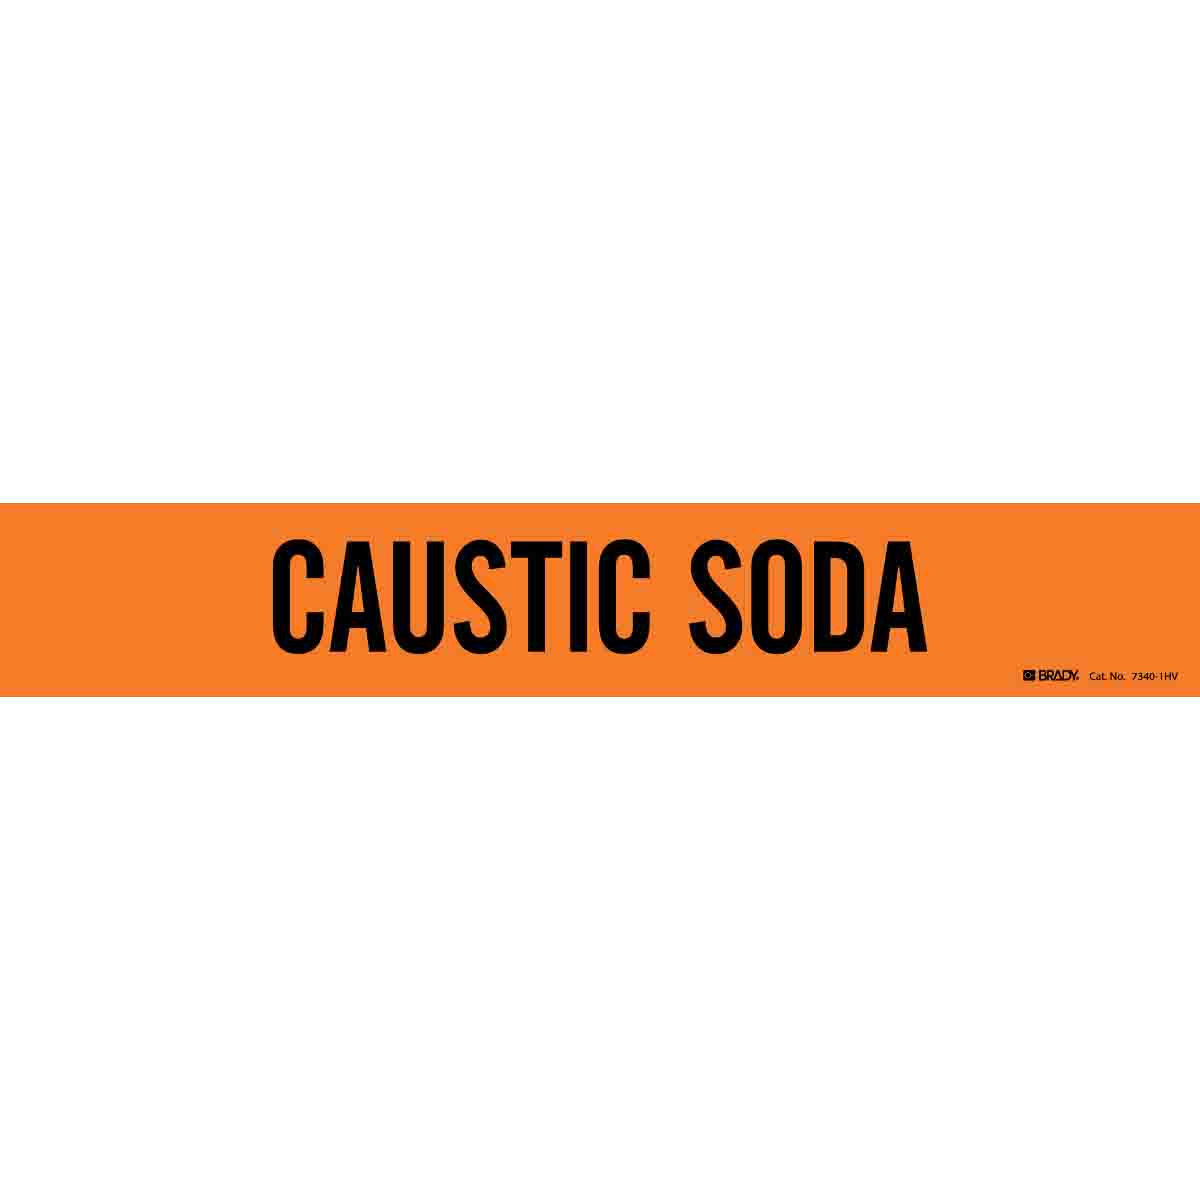 CAUSTIC SODA BLACK / ORANGE